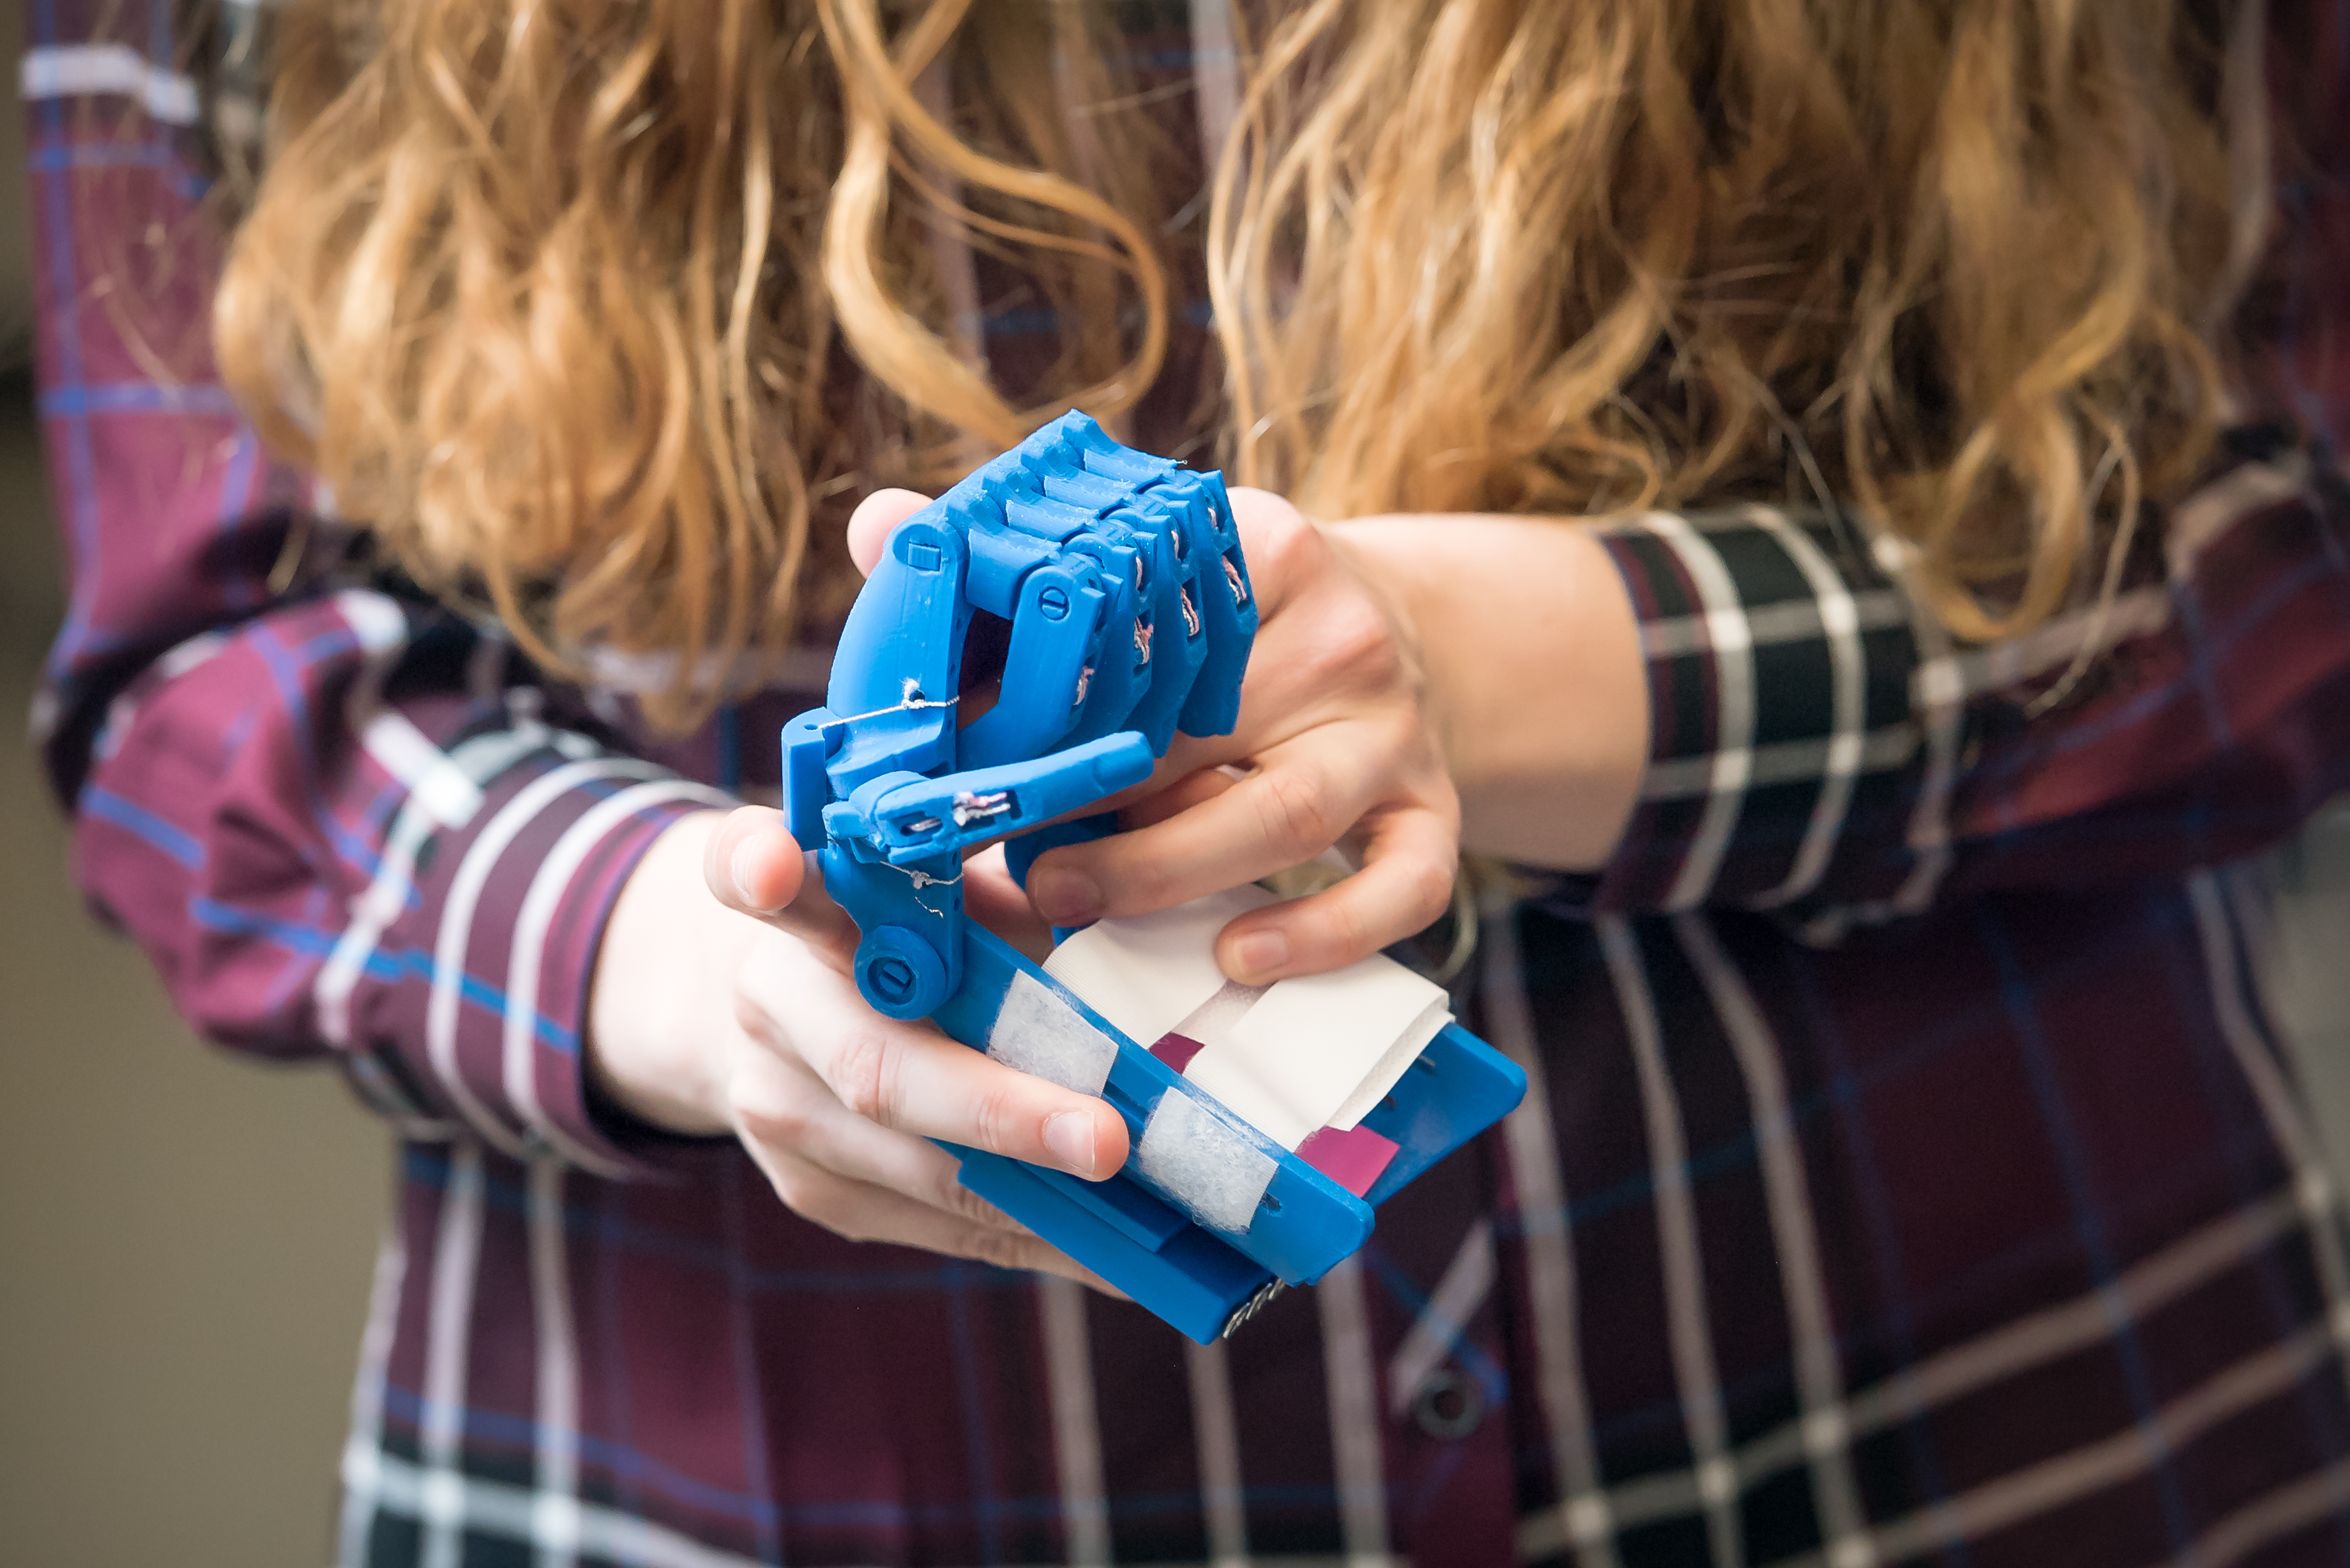 Using 3-D Printer, Engineering Student Creates Prosthetics for Children